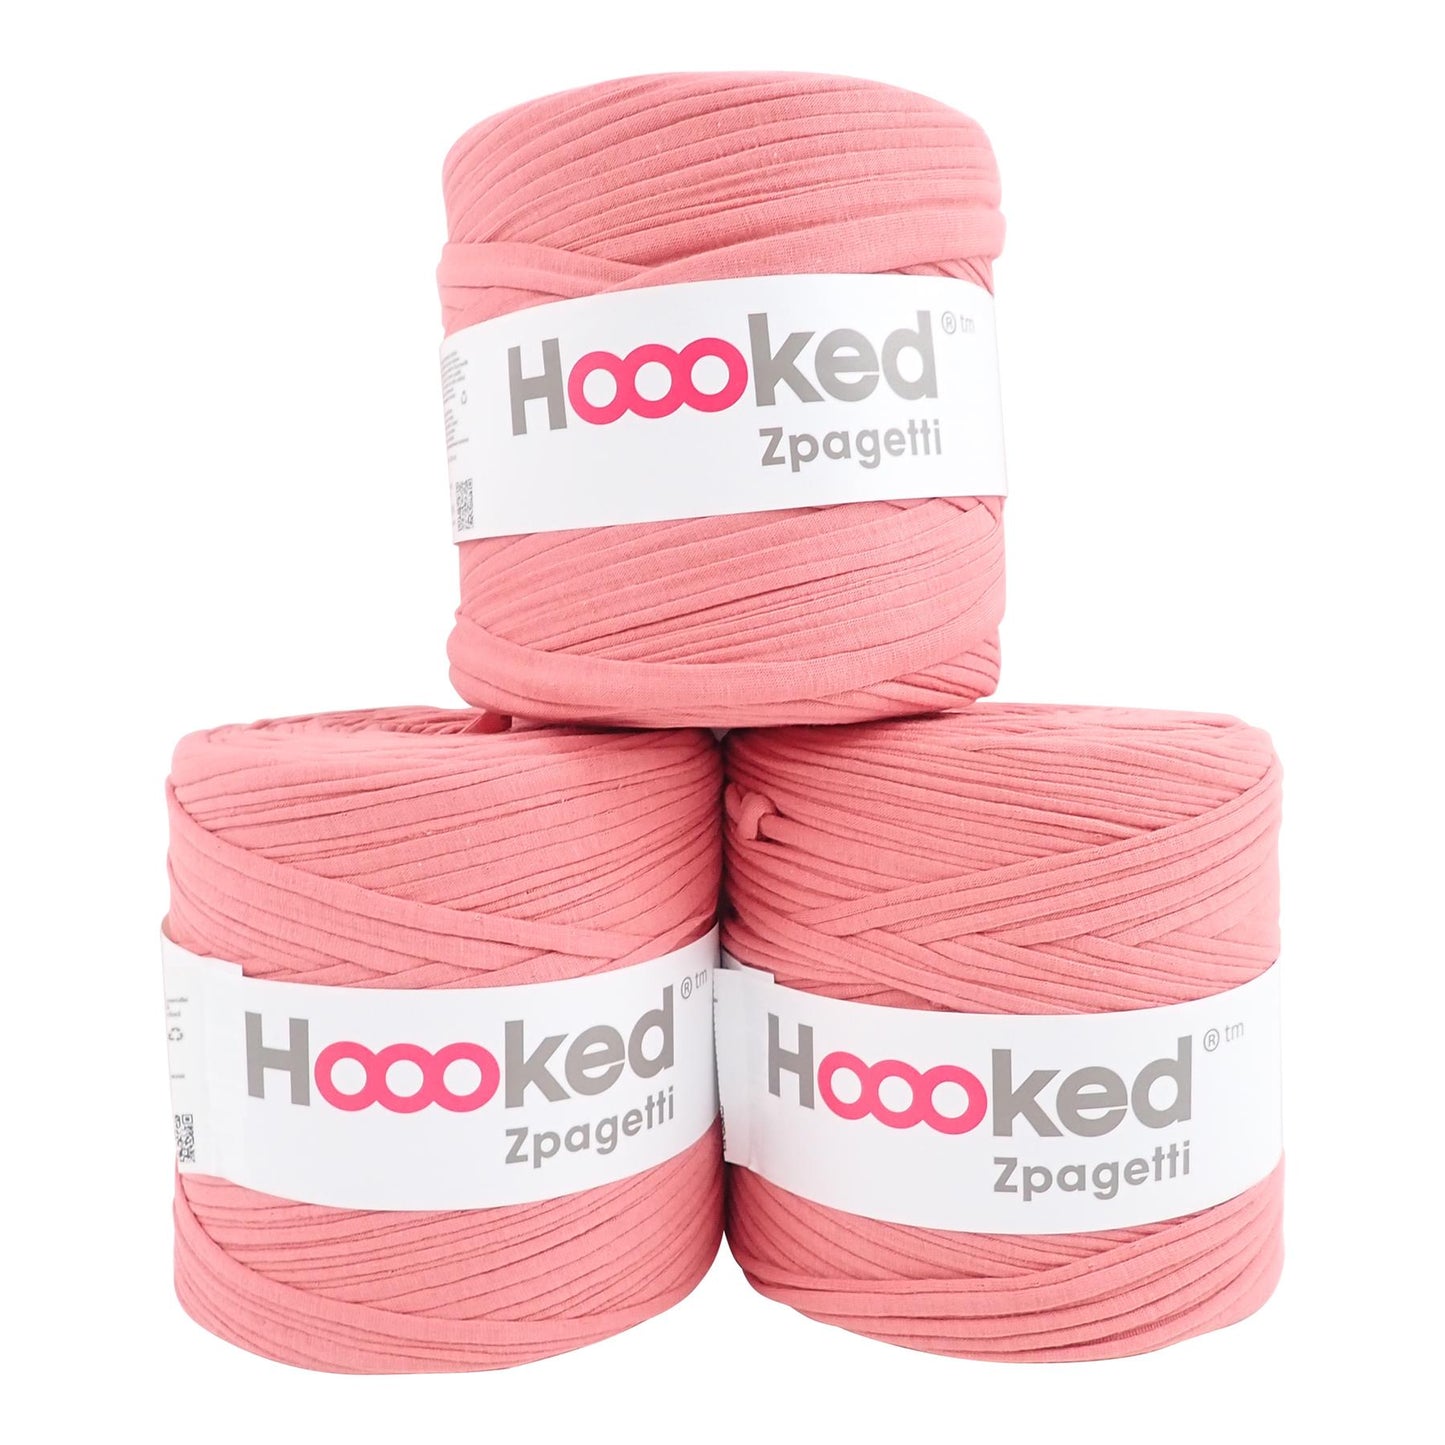 Hoooked Zpagetti Salmon Pink Cotton T-Shirt Yarn - 120M 700g (Pack of 3)